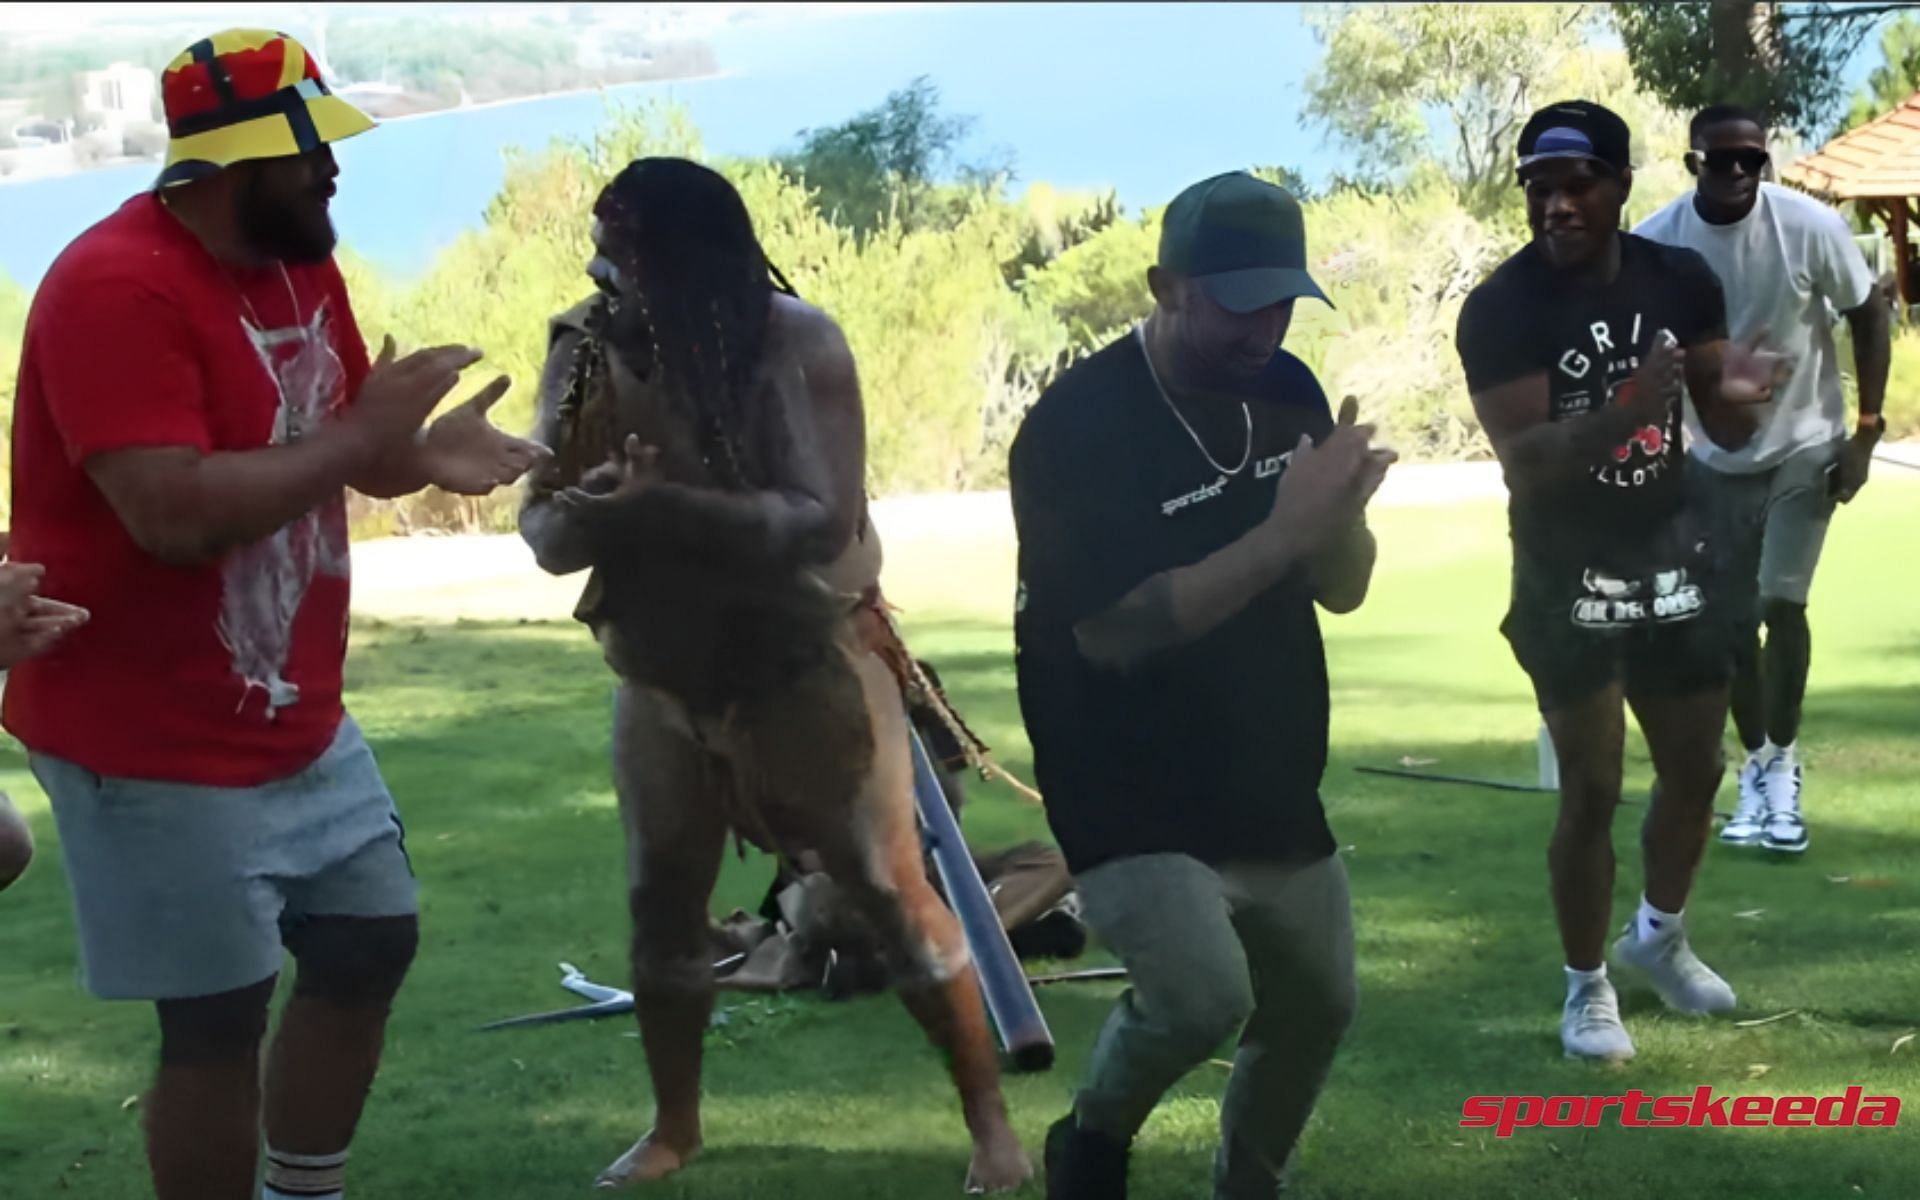 Alexander Volkanovski and Tai Tuivasa dancing with aboriginals